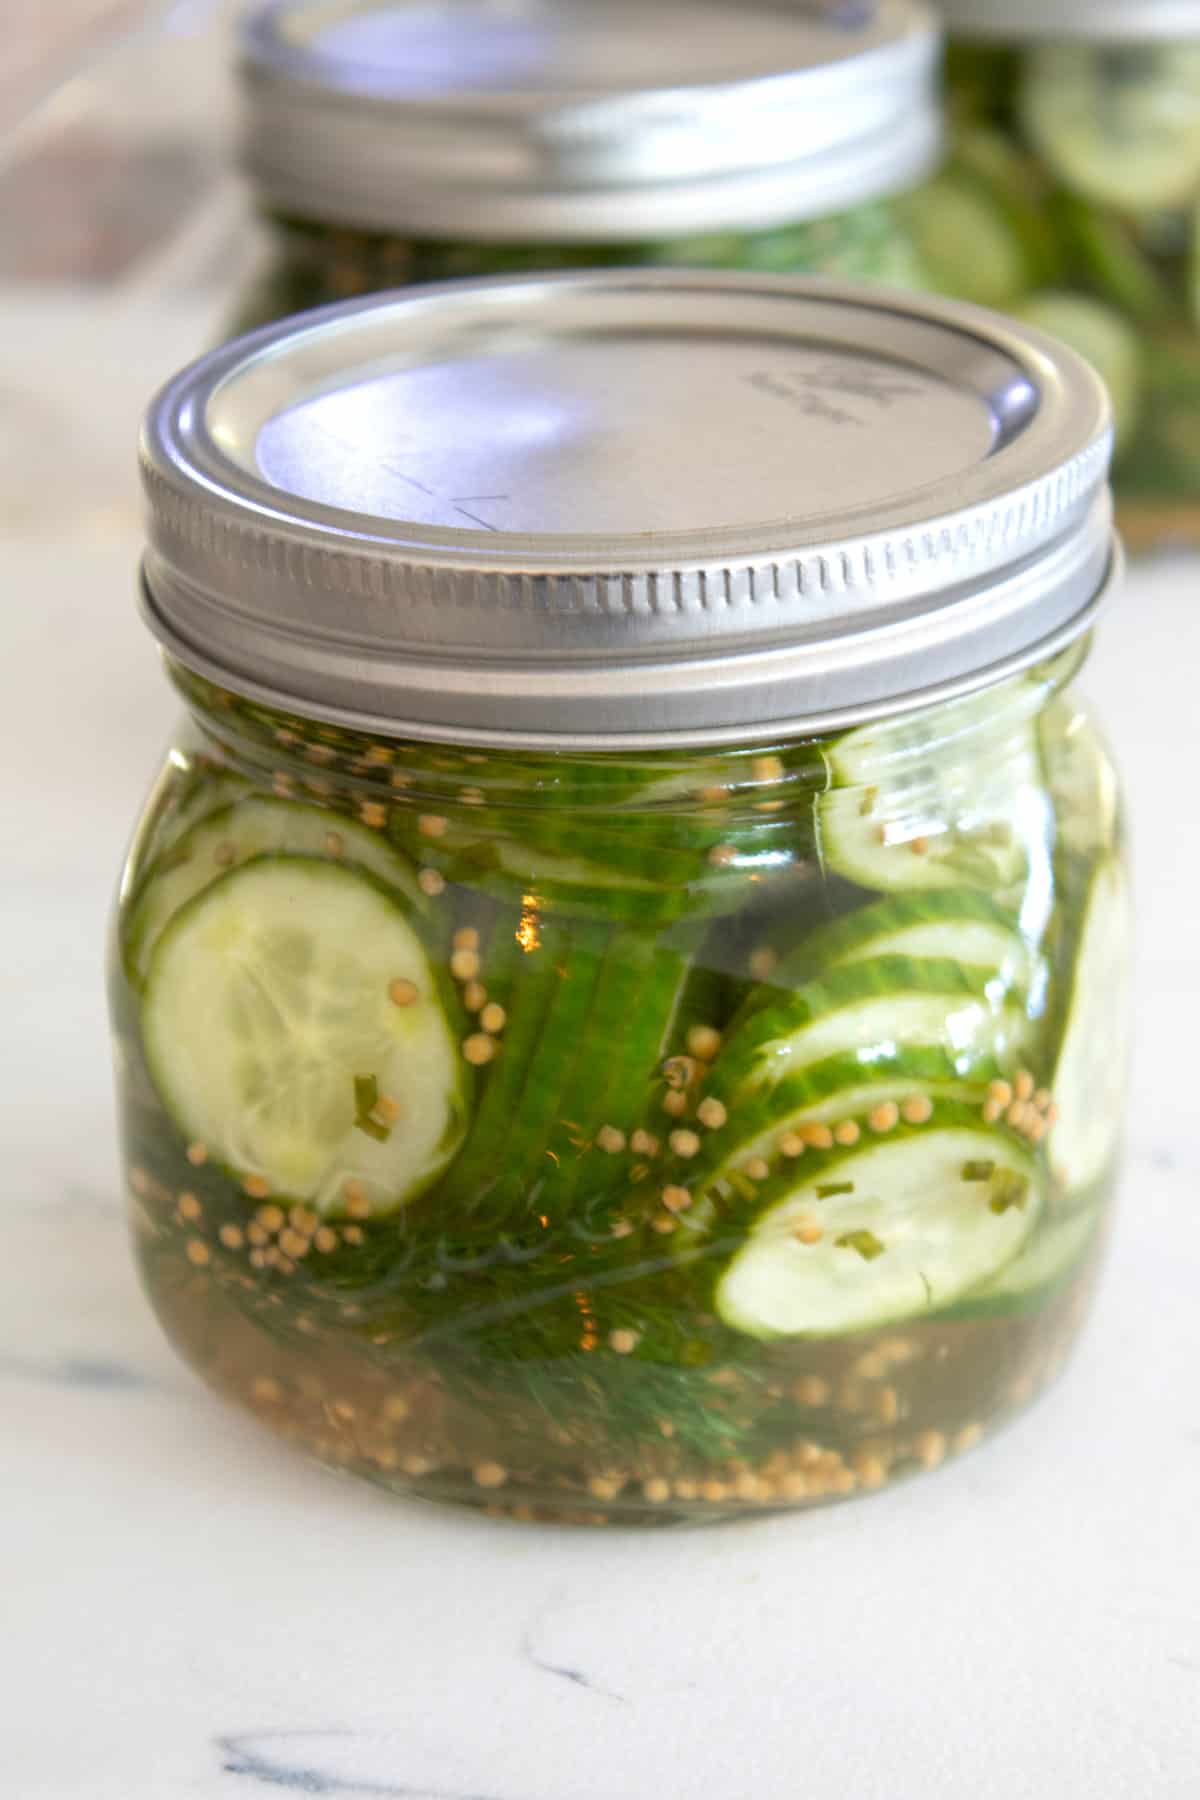 full view of jar full of pickles